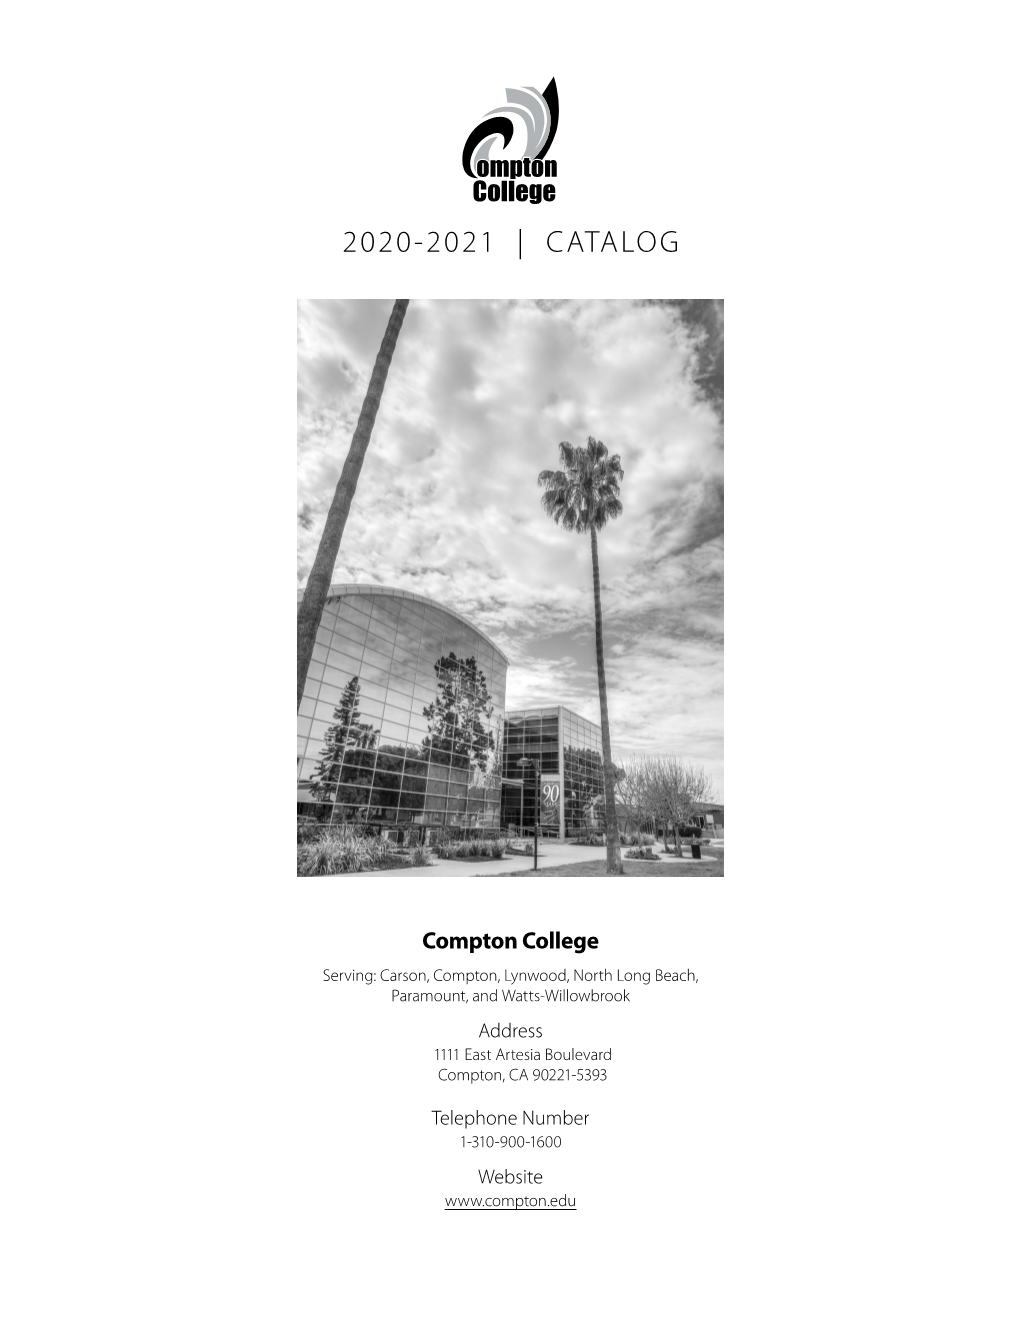 Compton College 2020-2021 Catalog